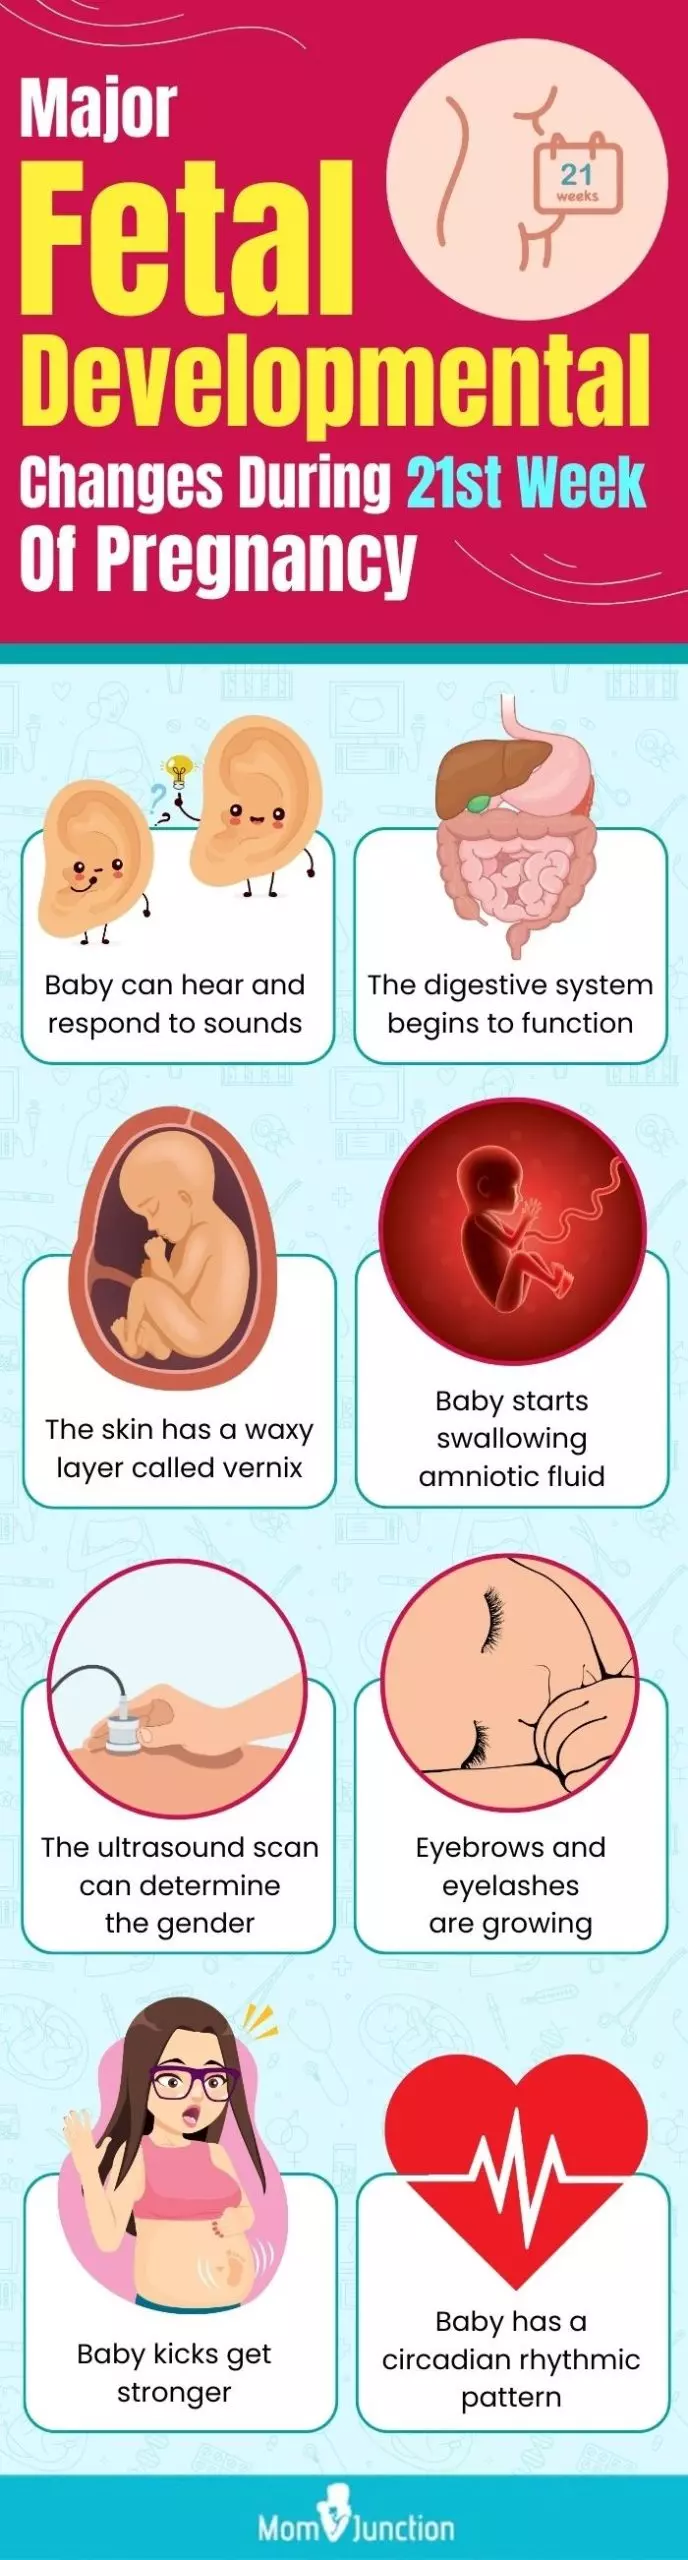 major fetal developmental changes during 21st week of pregnancy (infographic)